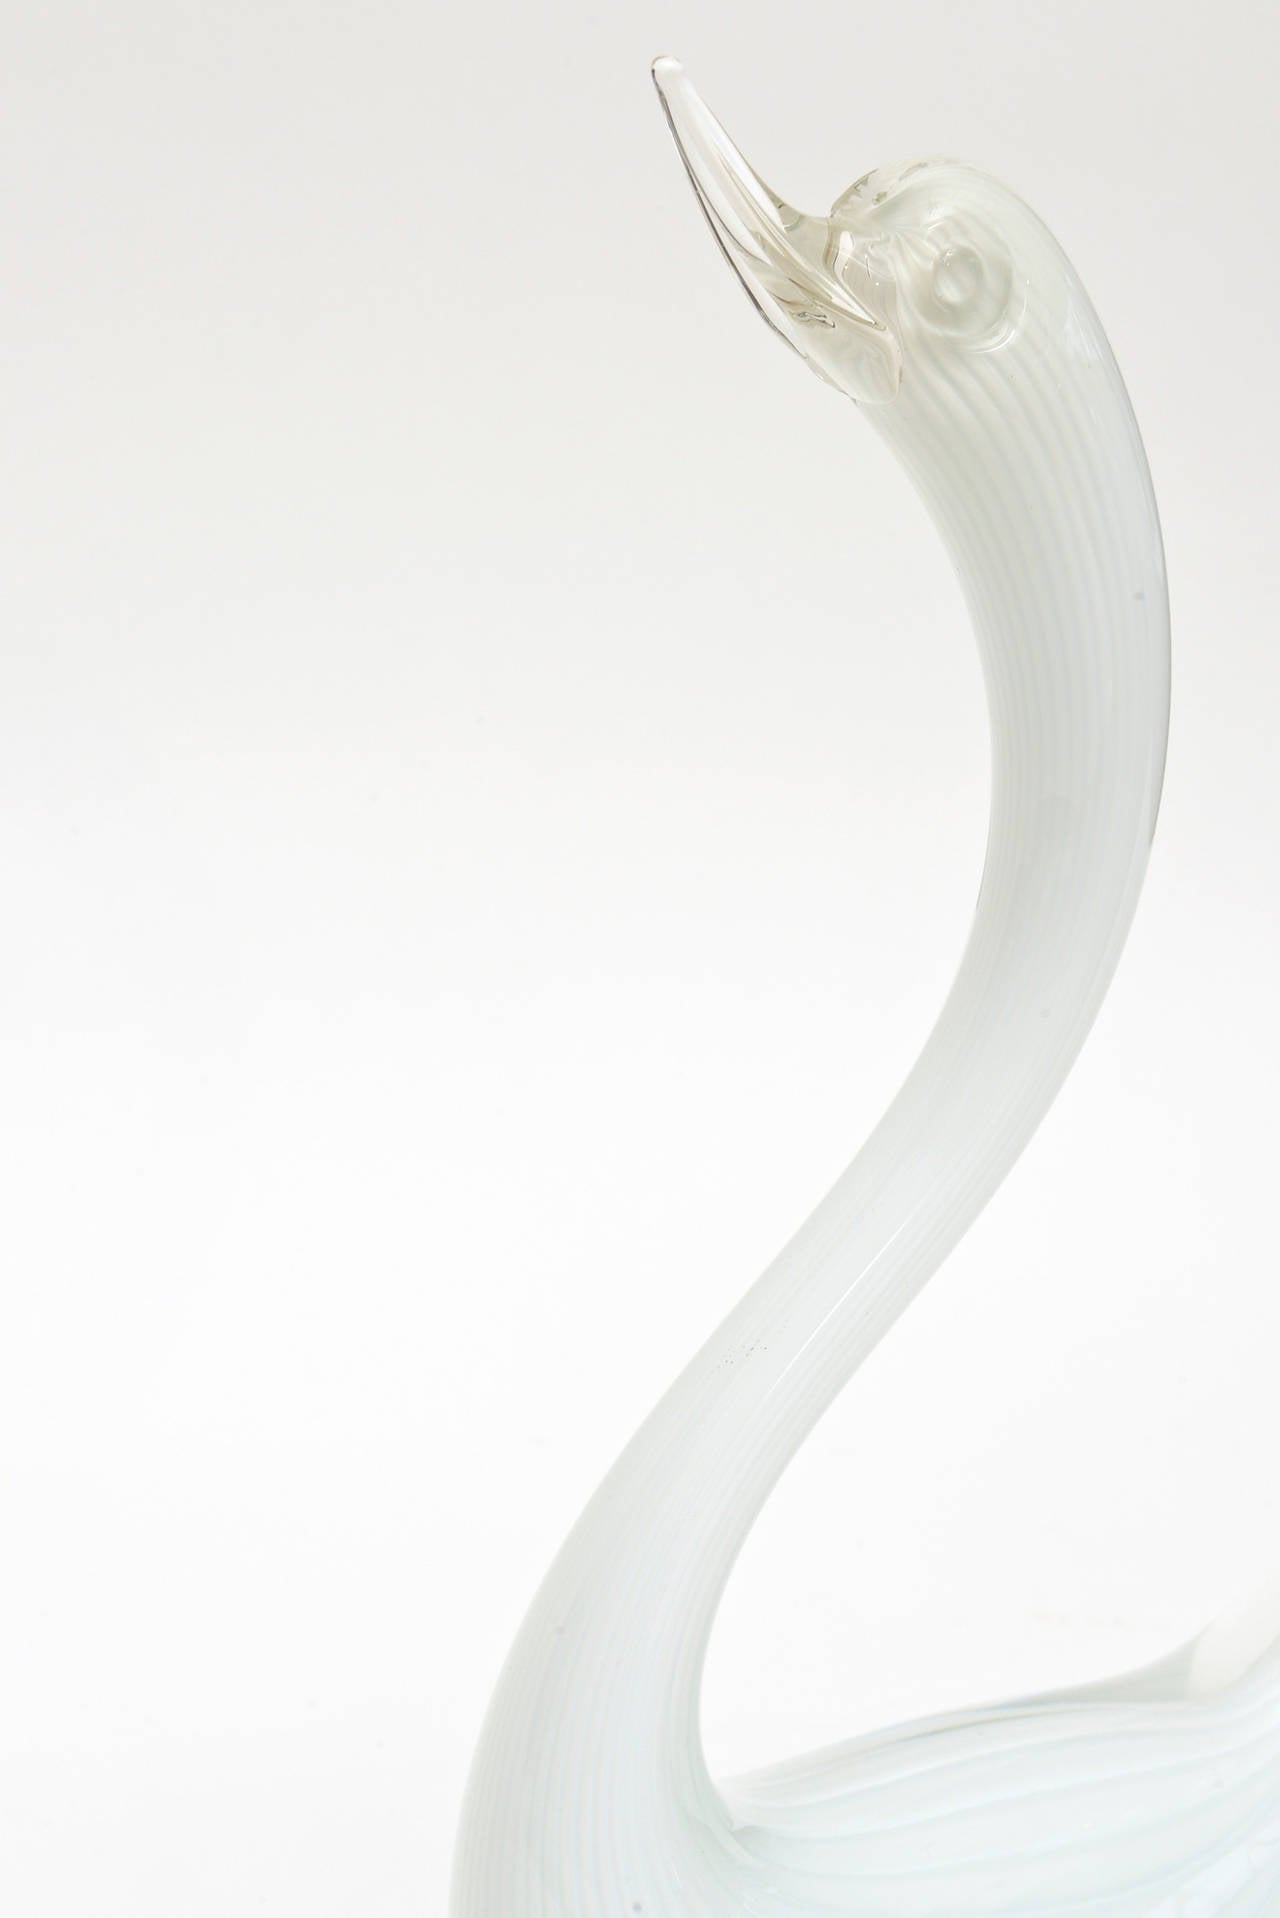 Mid-20th Century Murano Seguso White Swan Glass Sculpture For Sale